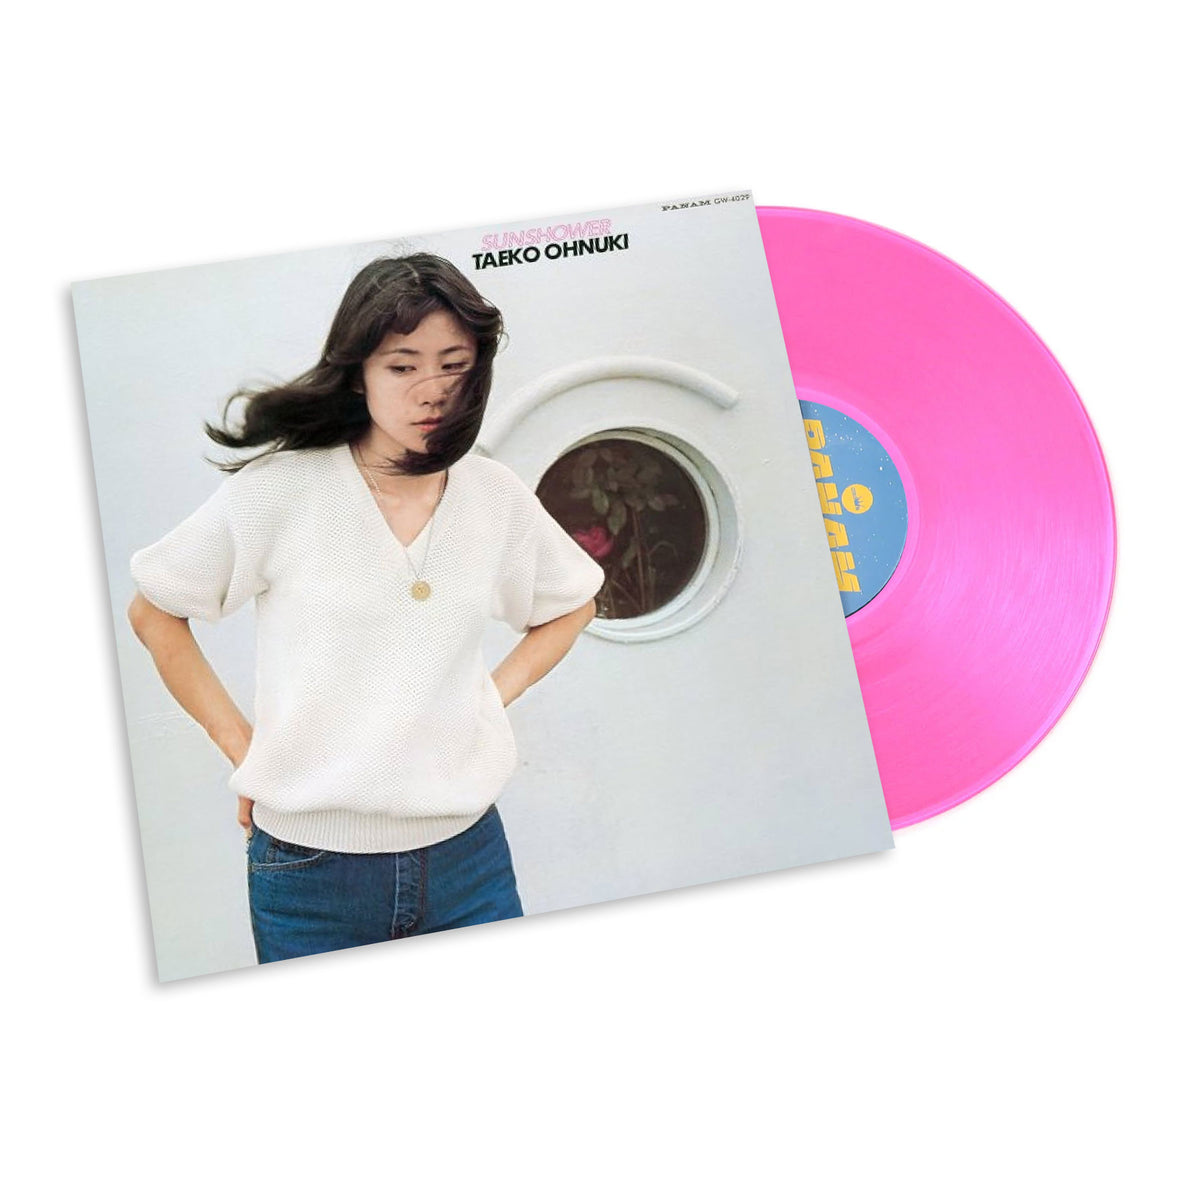 Taeko Ohnuki: Sunshower (Japan Import, Pink Colored Vinyl) Vinyl LP -  PRE-ORDER